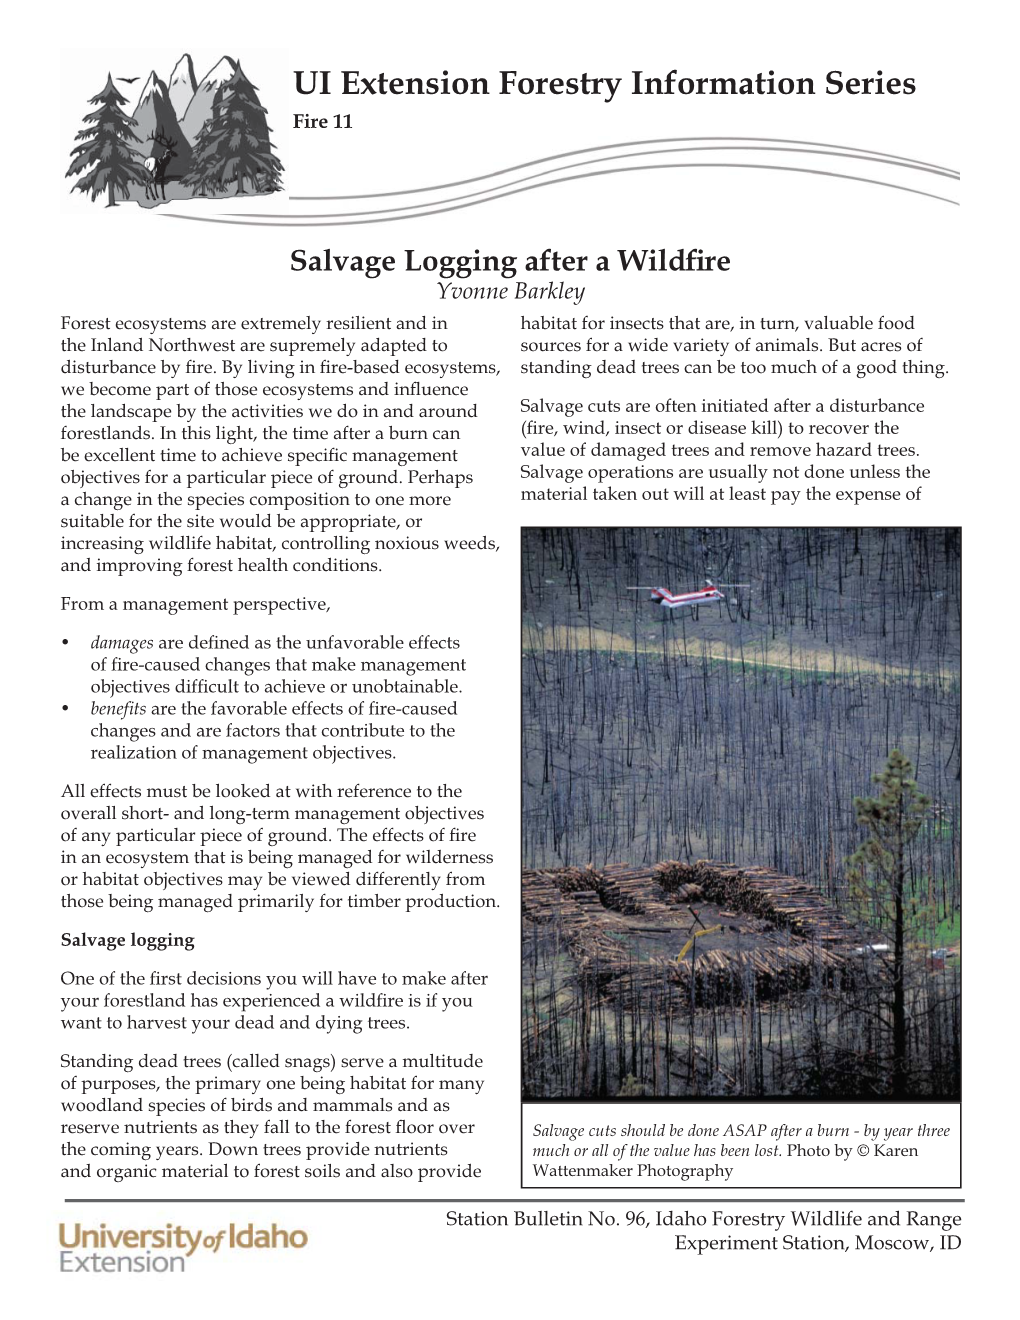 Salvage Logging